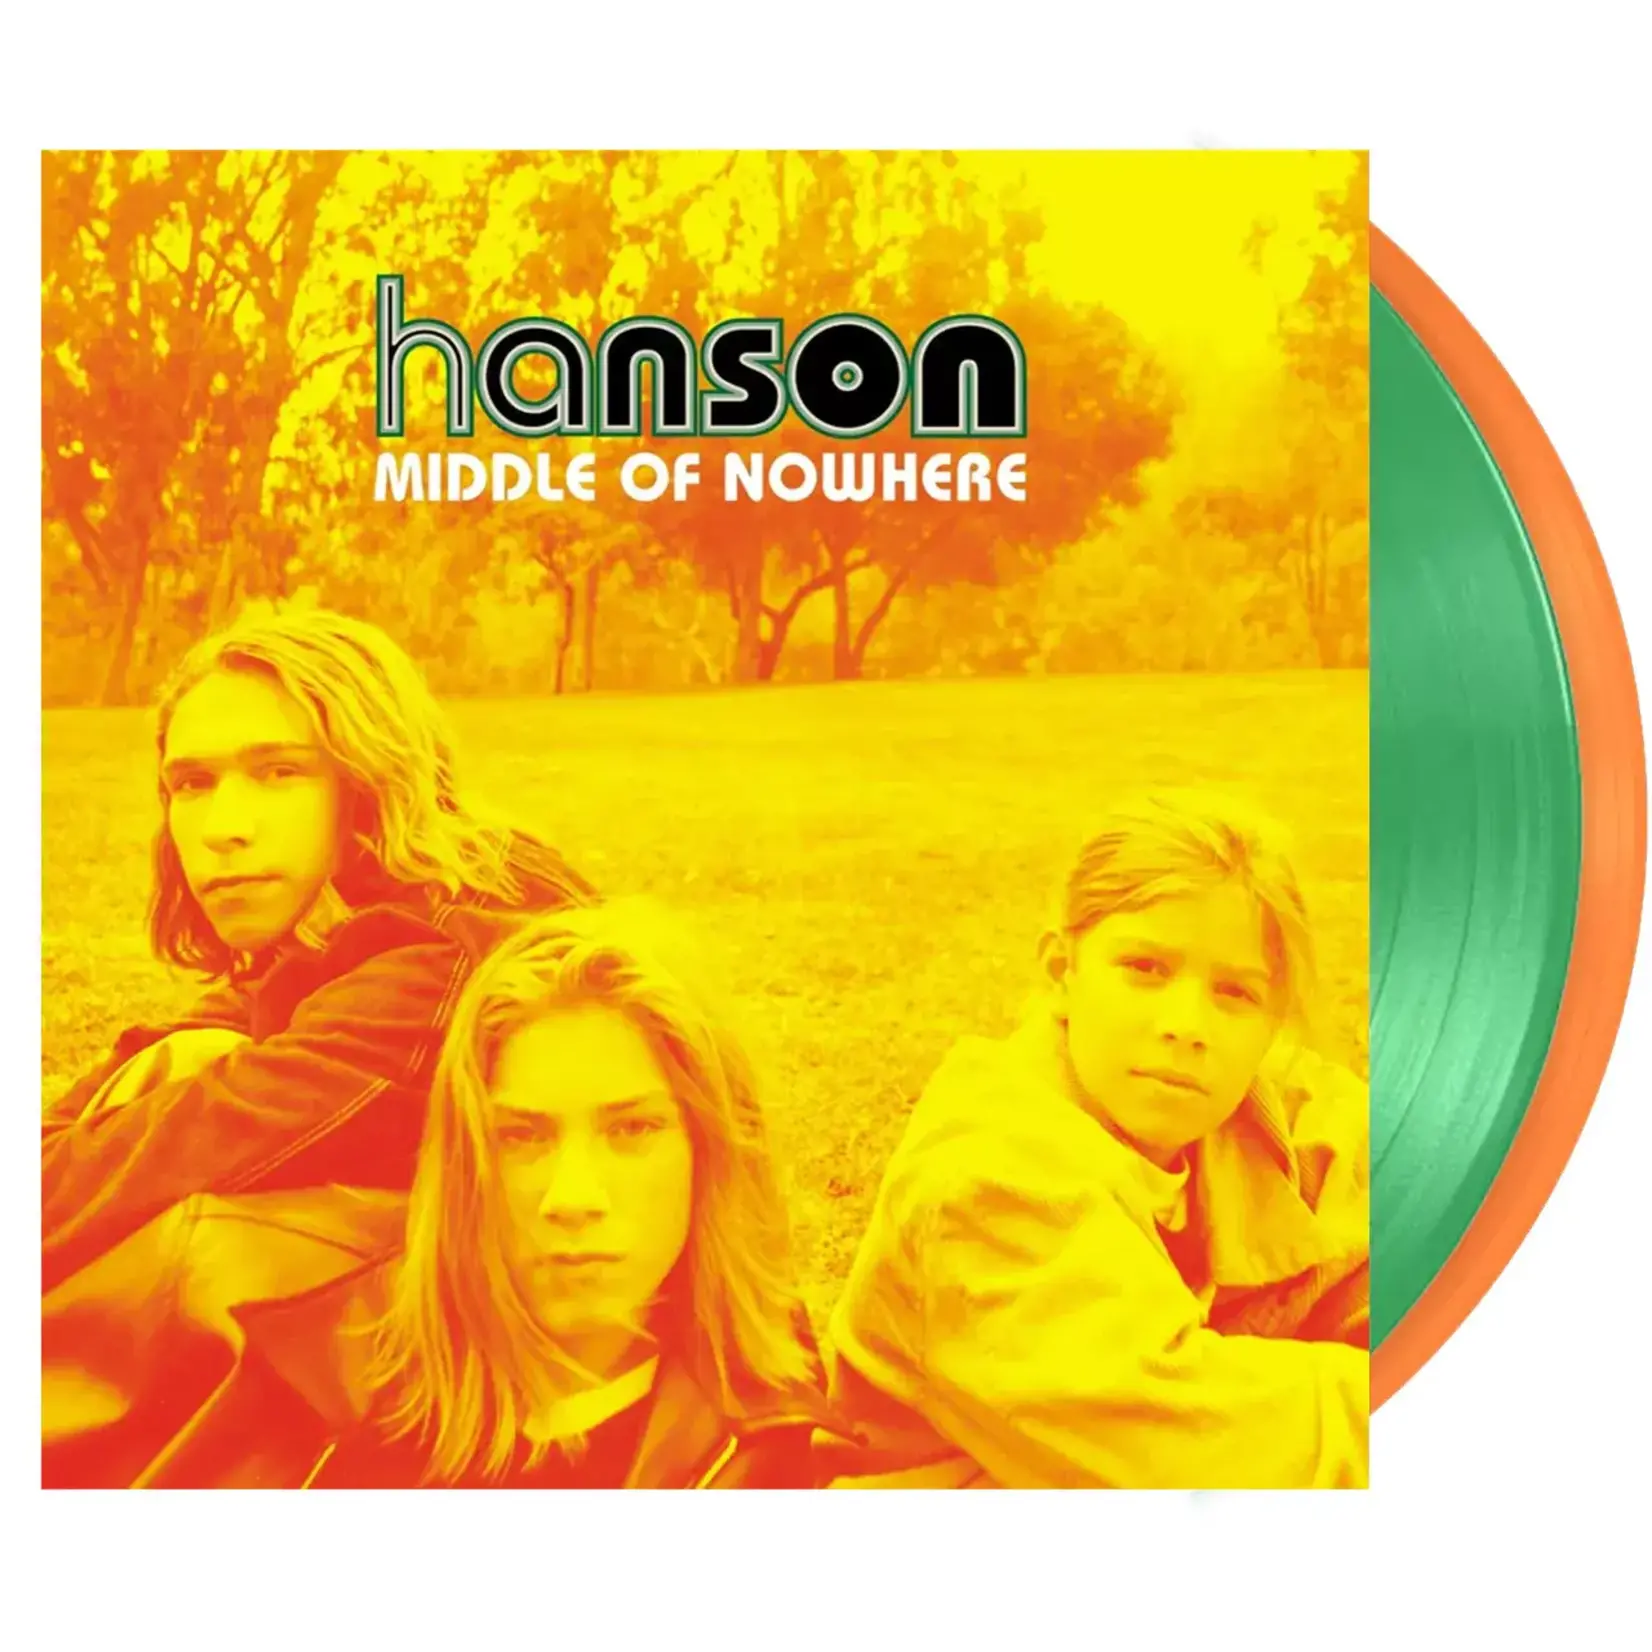 [New] Hanson: Middle Of Nowhere (2LP, green & orange vinyl, remastered) [MERCURY]